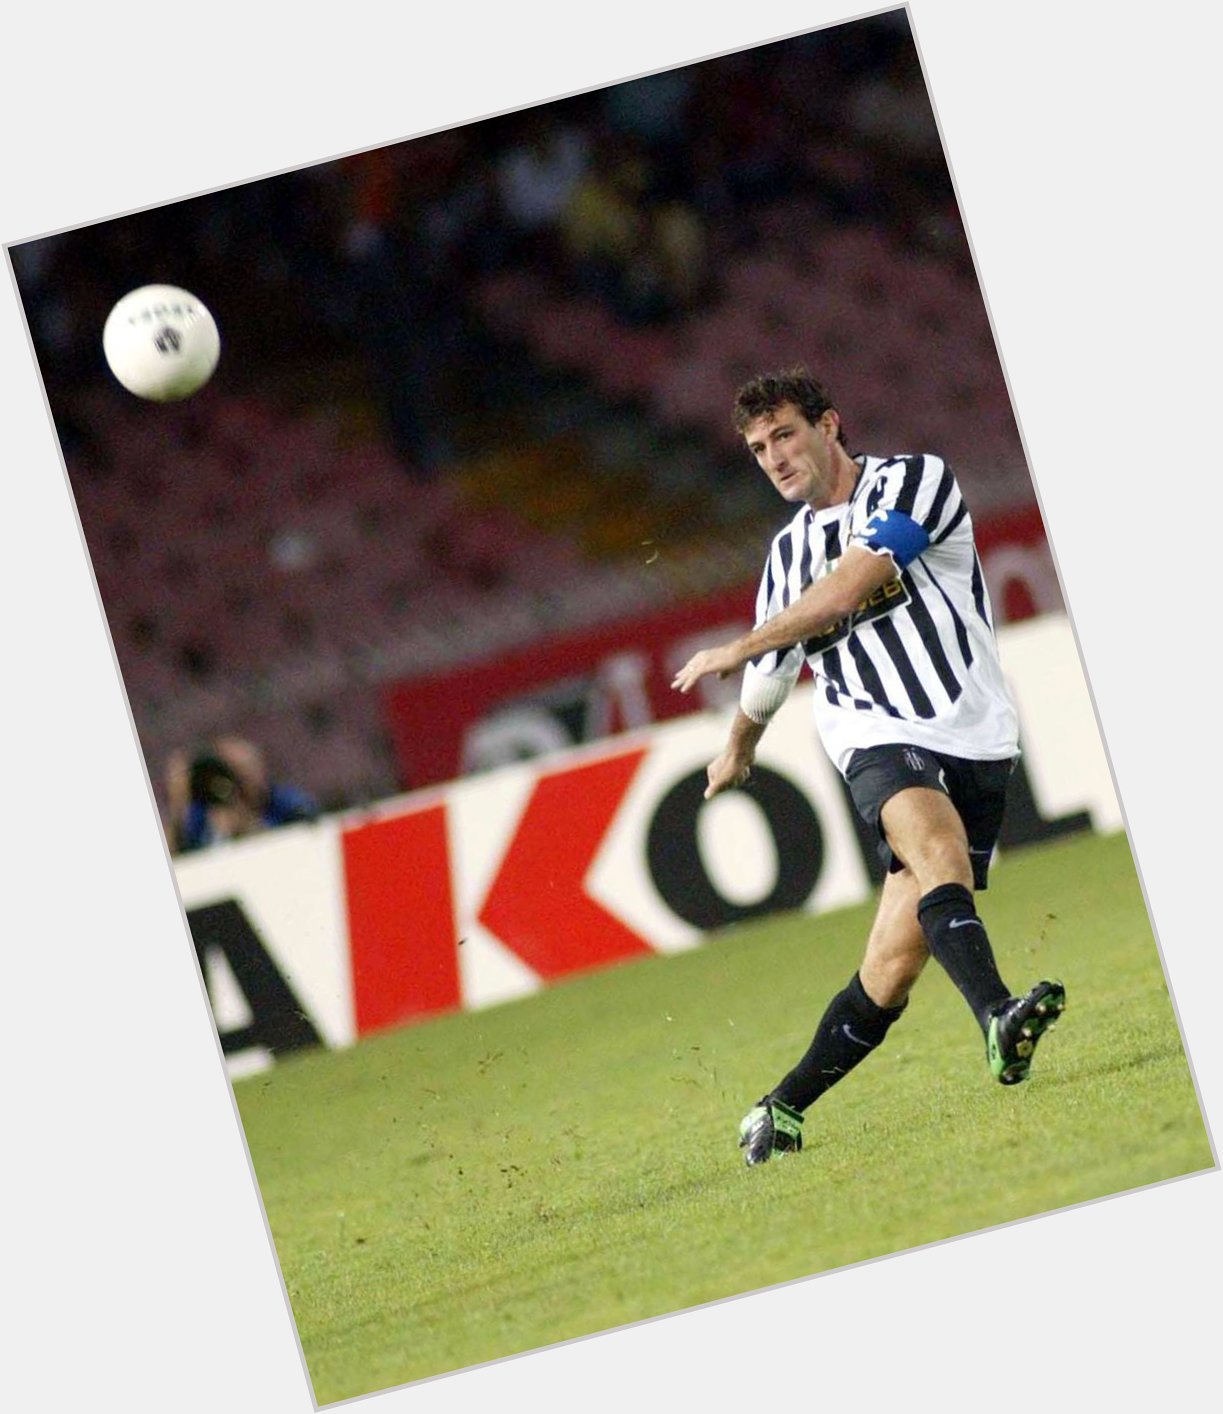 Happy birthday to Juventus legend Ciro Ferrara, who turns 50 today. 

Games: 358
Goals: 20 